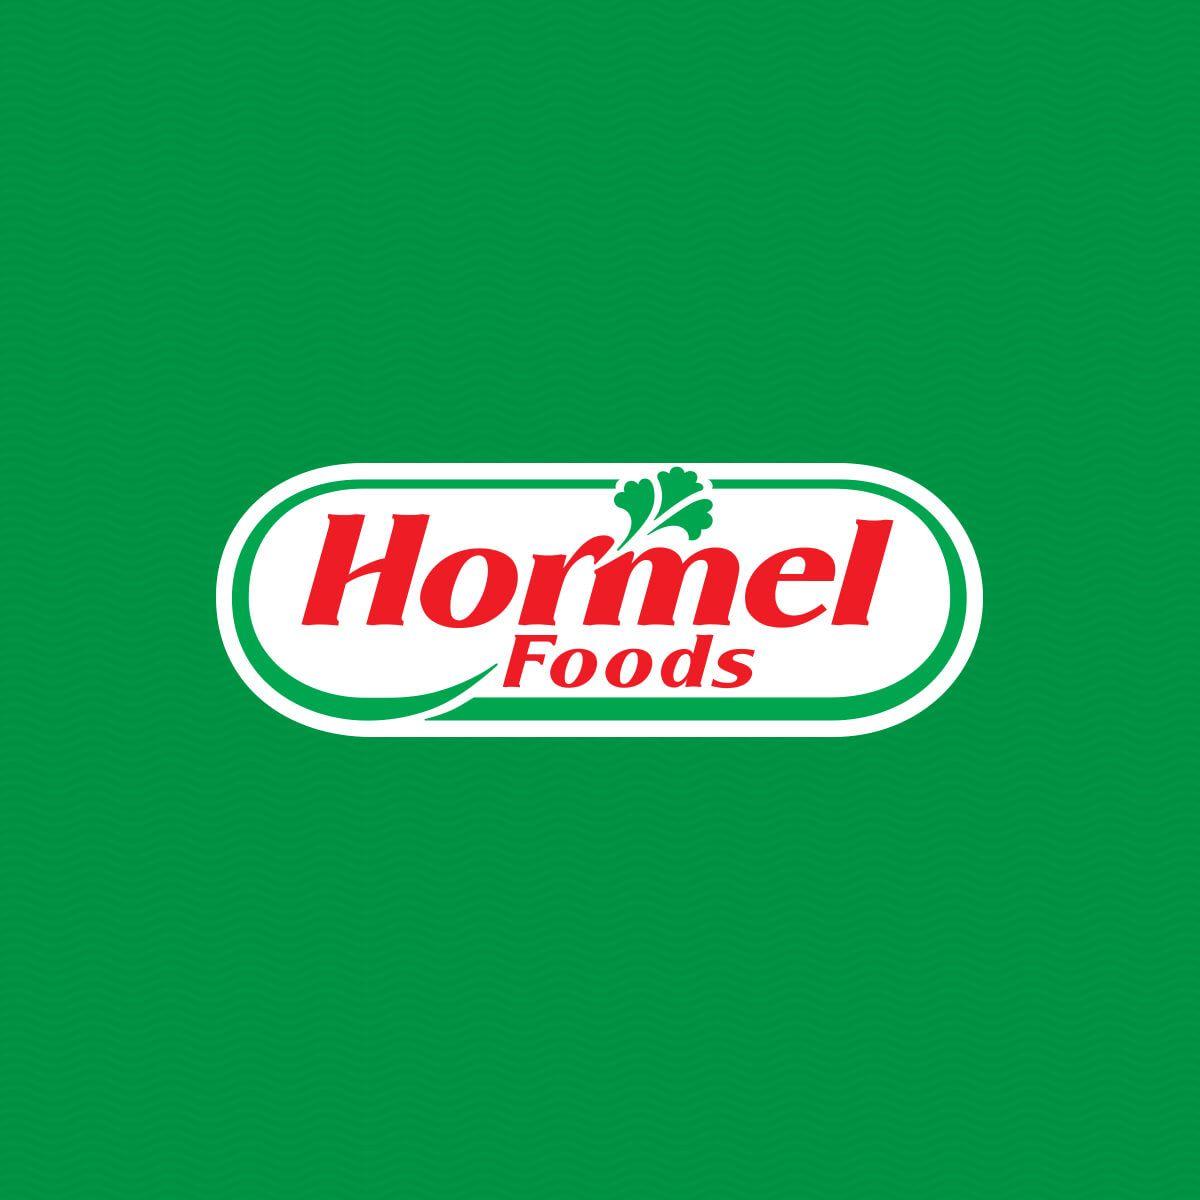 American Food Company Logo - Hormel Foods